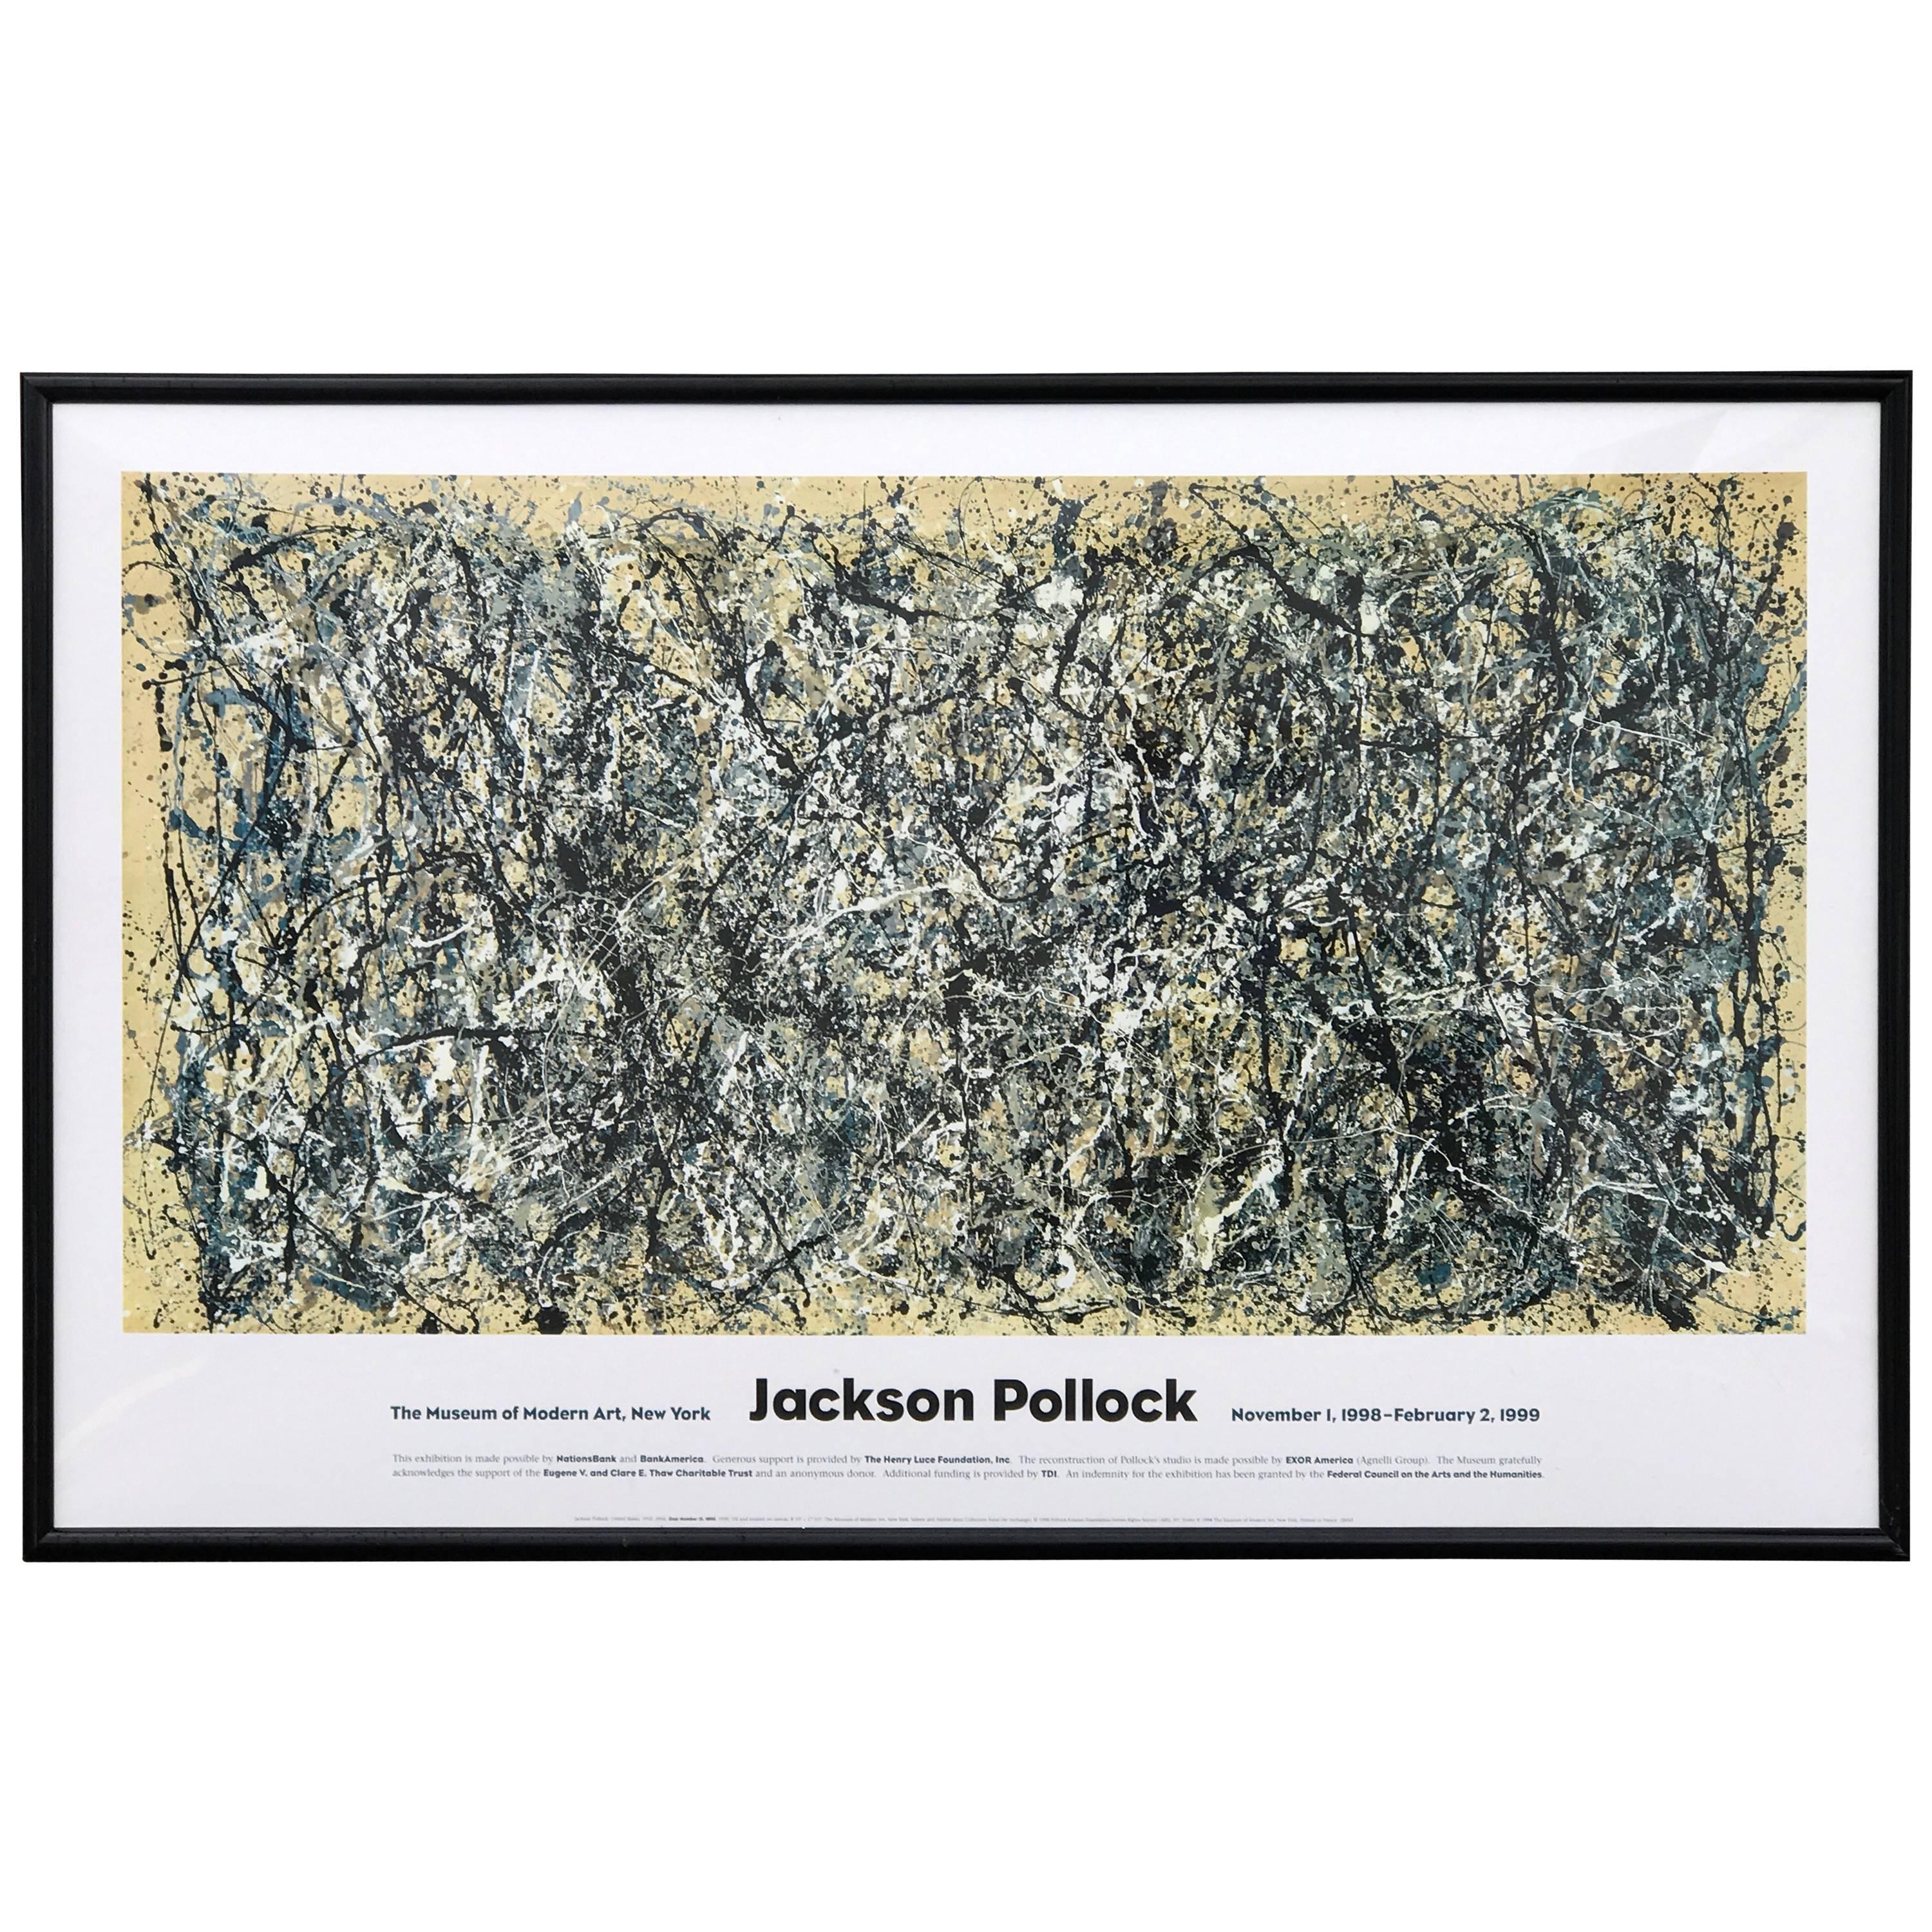 Monumental MOMA Jackson Pollack Exhibition Lithograph Poster 1998 